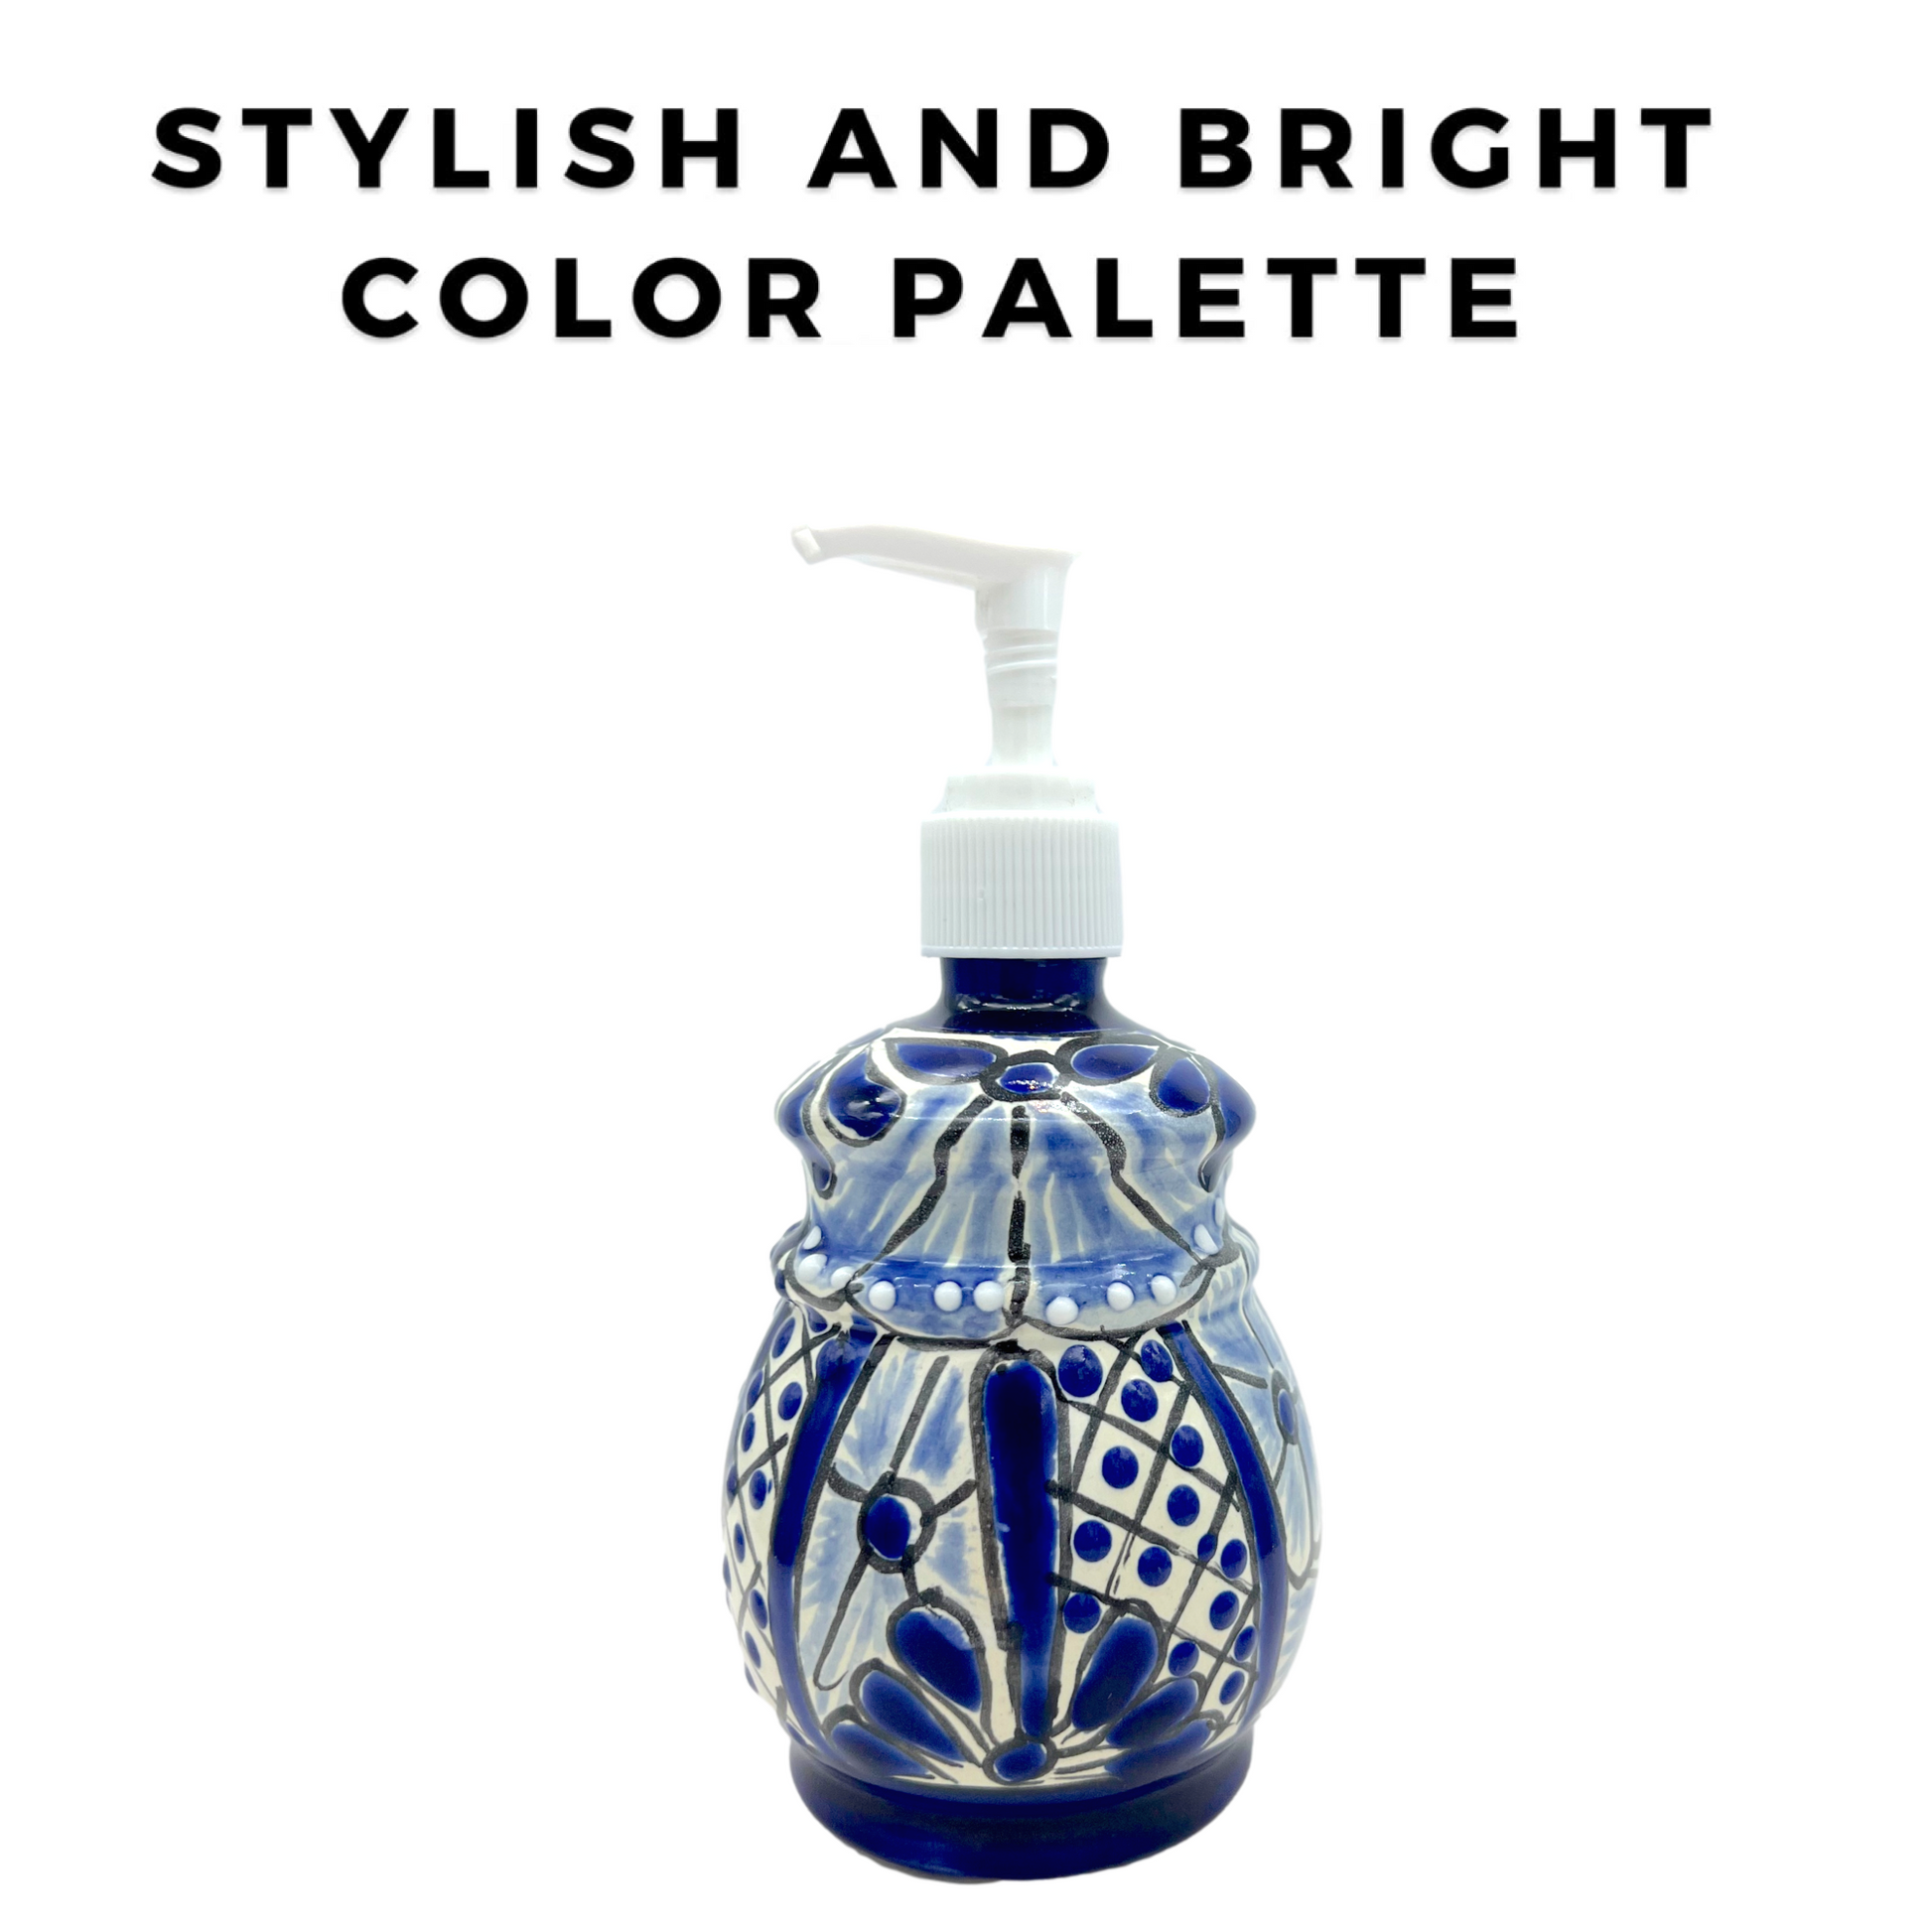 Hand-painted Talavera Ceramic Soap Dispenser in blue and white, a unique addition to kitchen or bathroom decor. stylish color palette